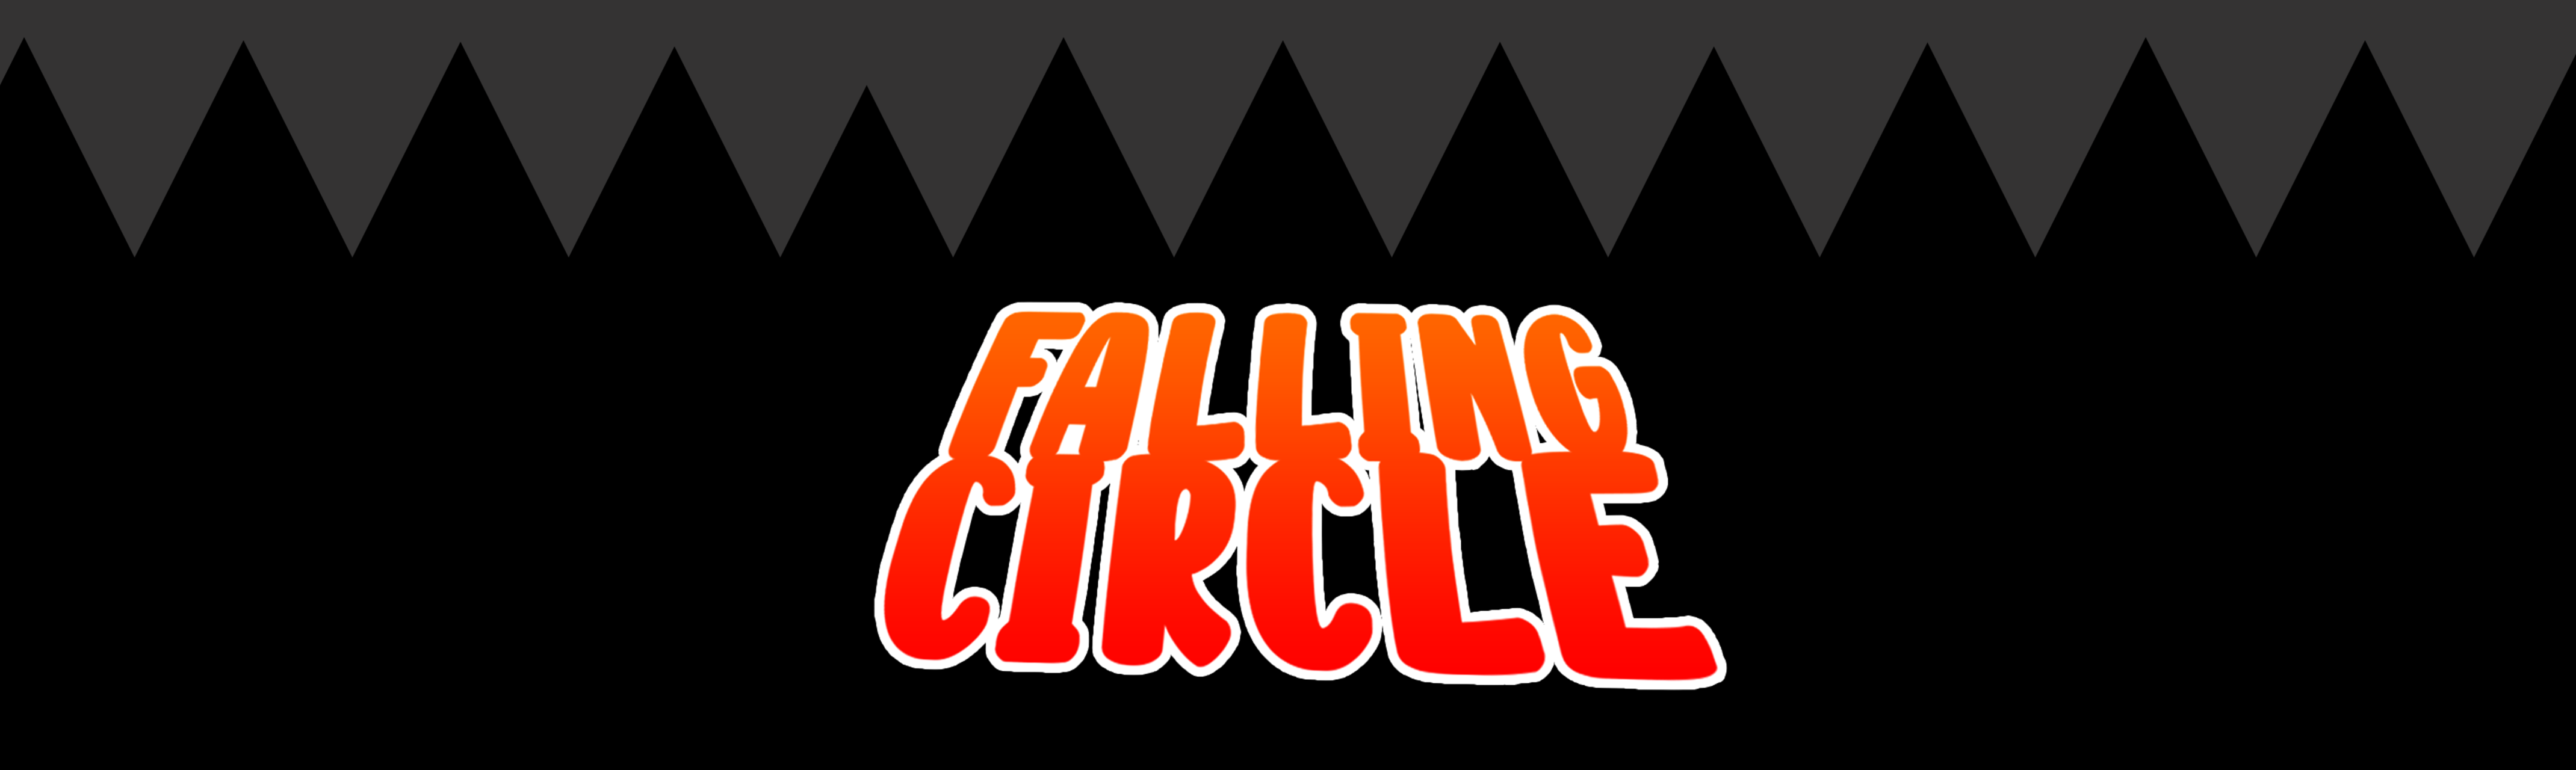 FallingCircle